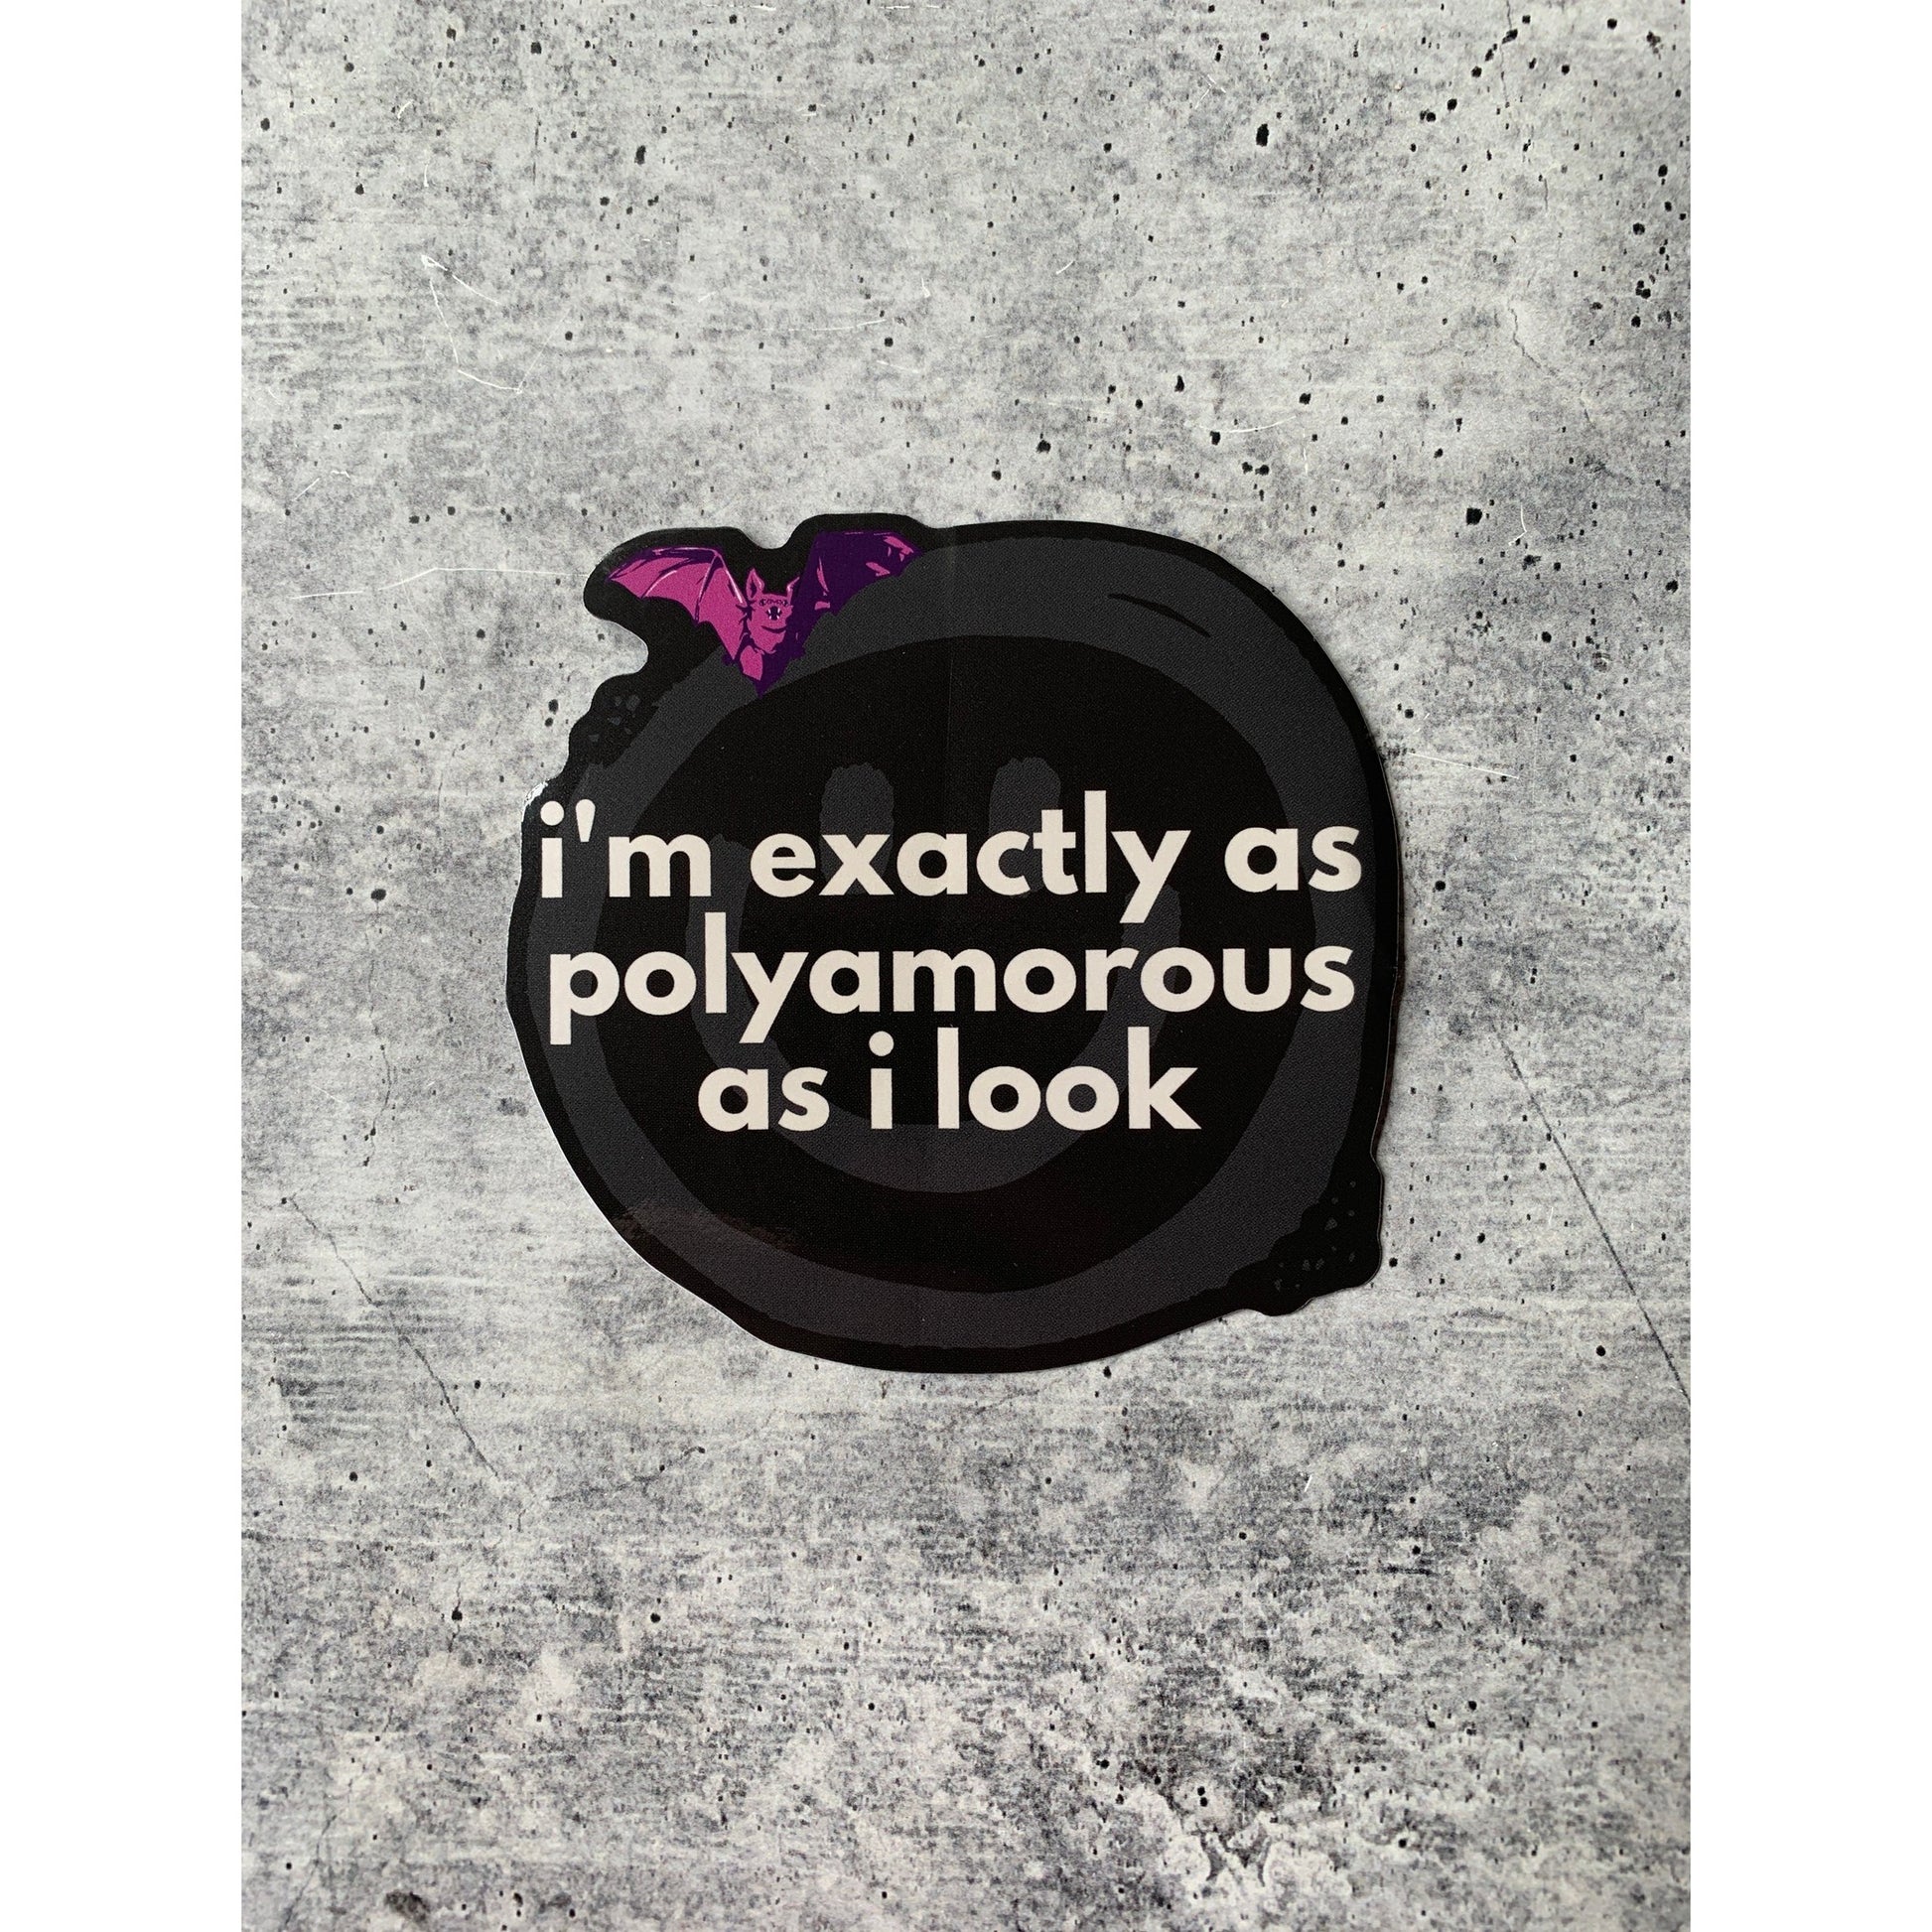 I'm Exactly as Polyamorous as I Look Die Cut Black Smiley Vinyl Sticker